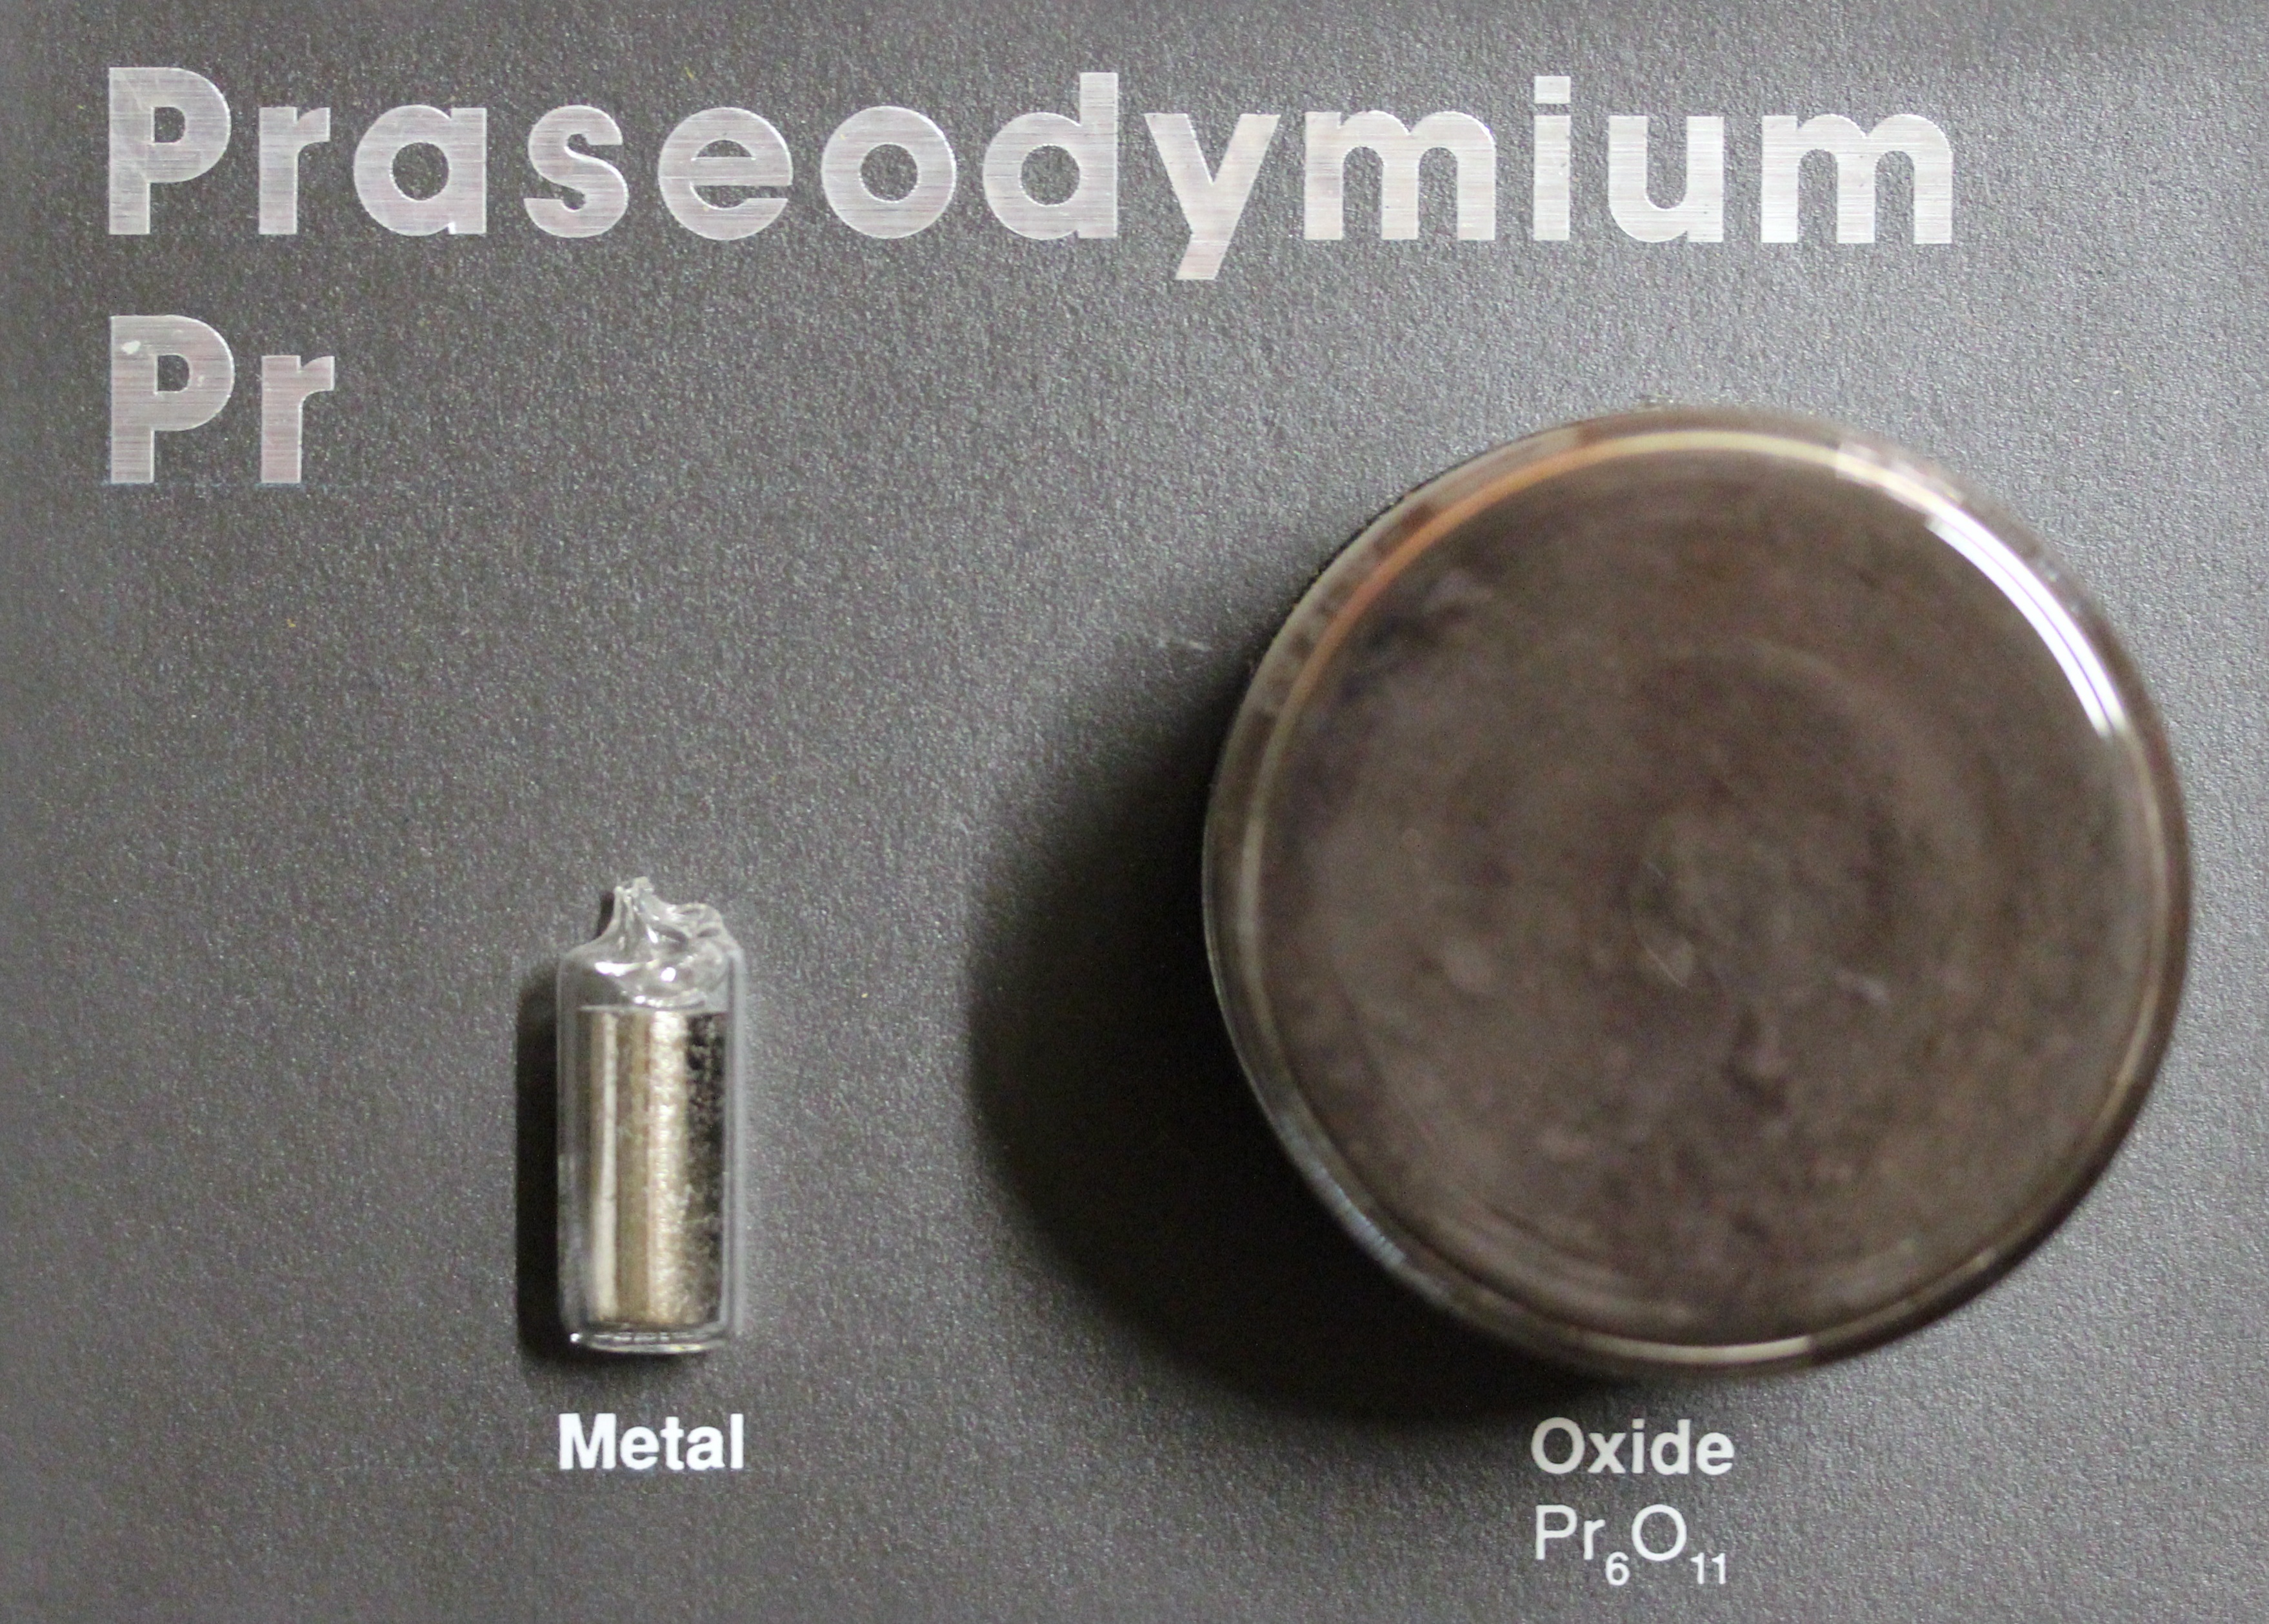 Praseodymium metal and oxide